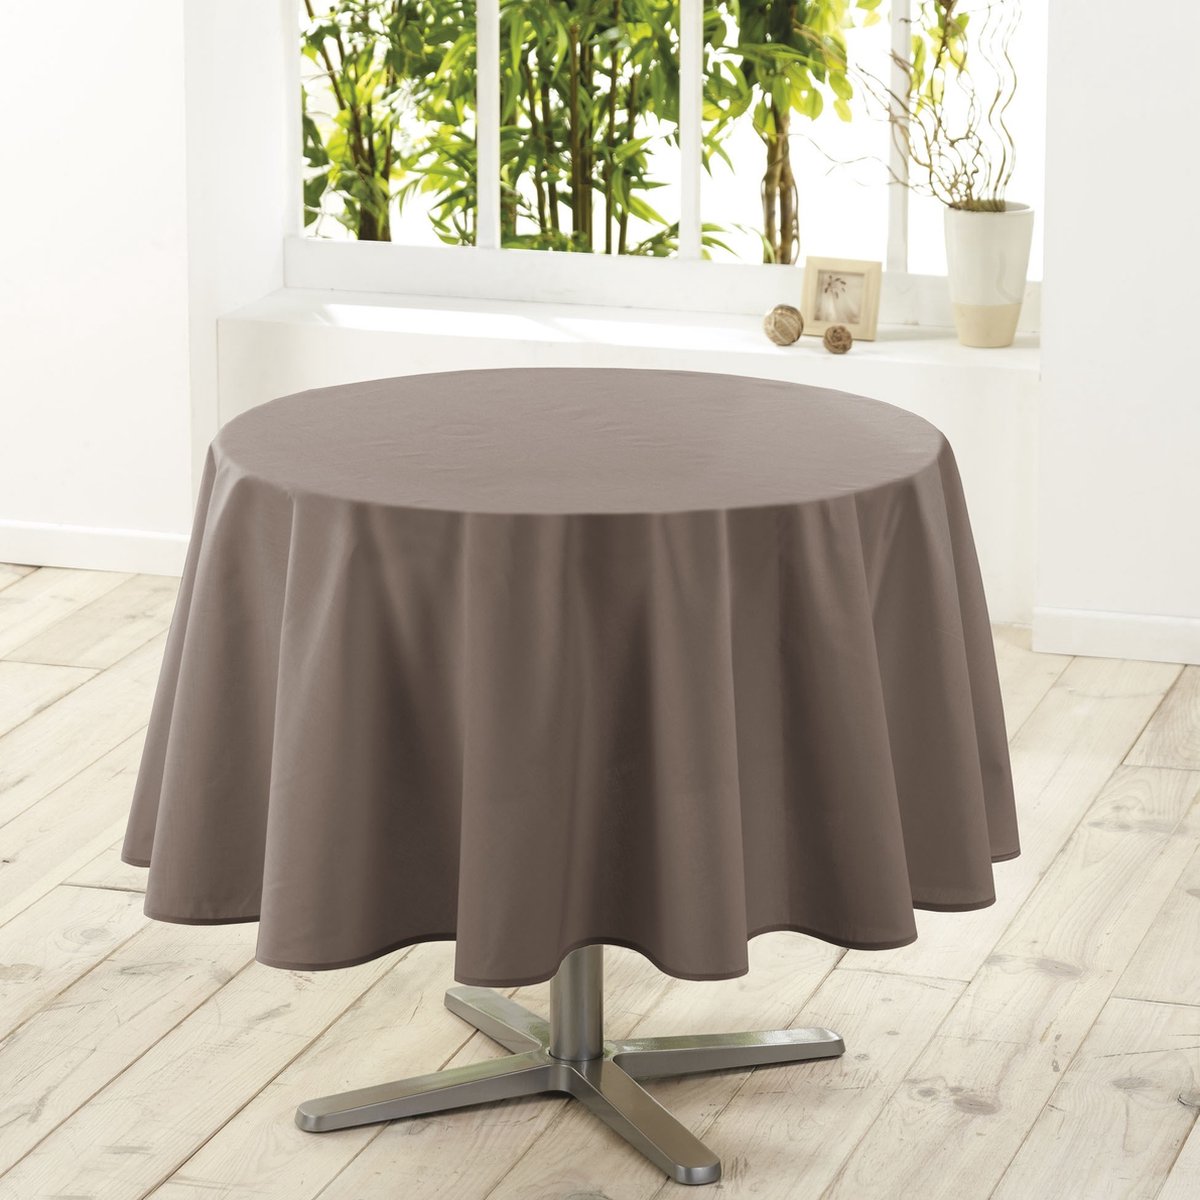 Wicotex-Tafellaken-Tafelkleed- textiel polyester taupe rond 180cm-vlekbestendig-waterafstotend